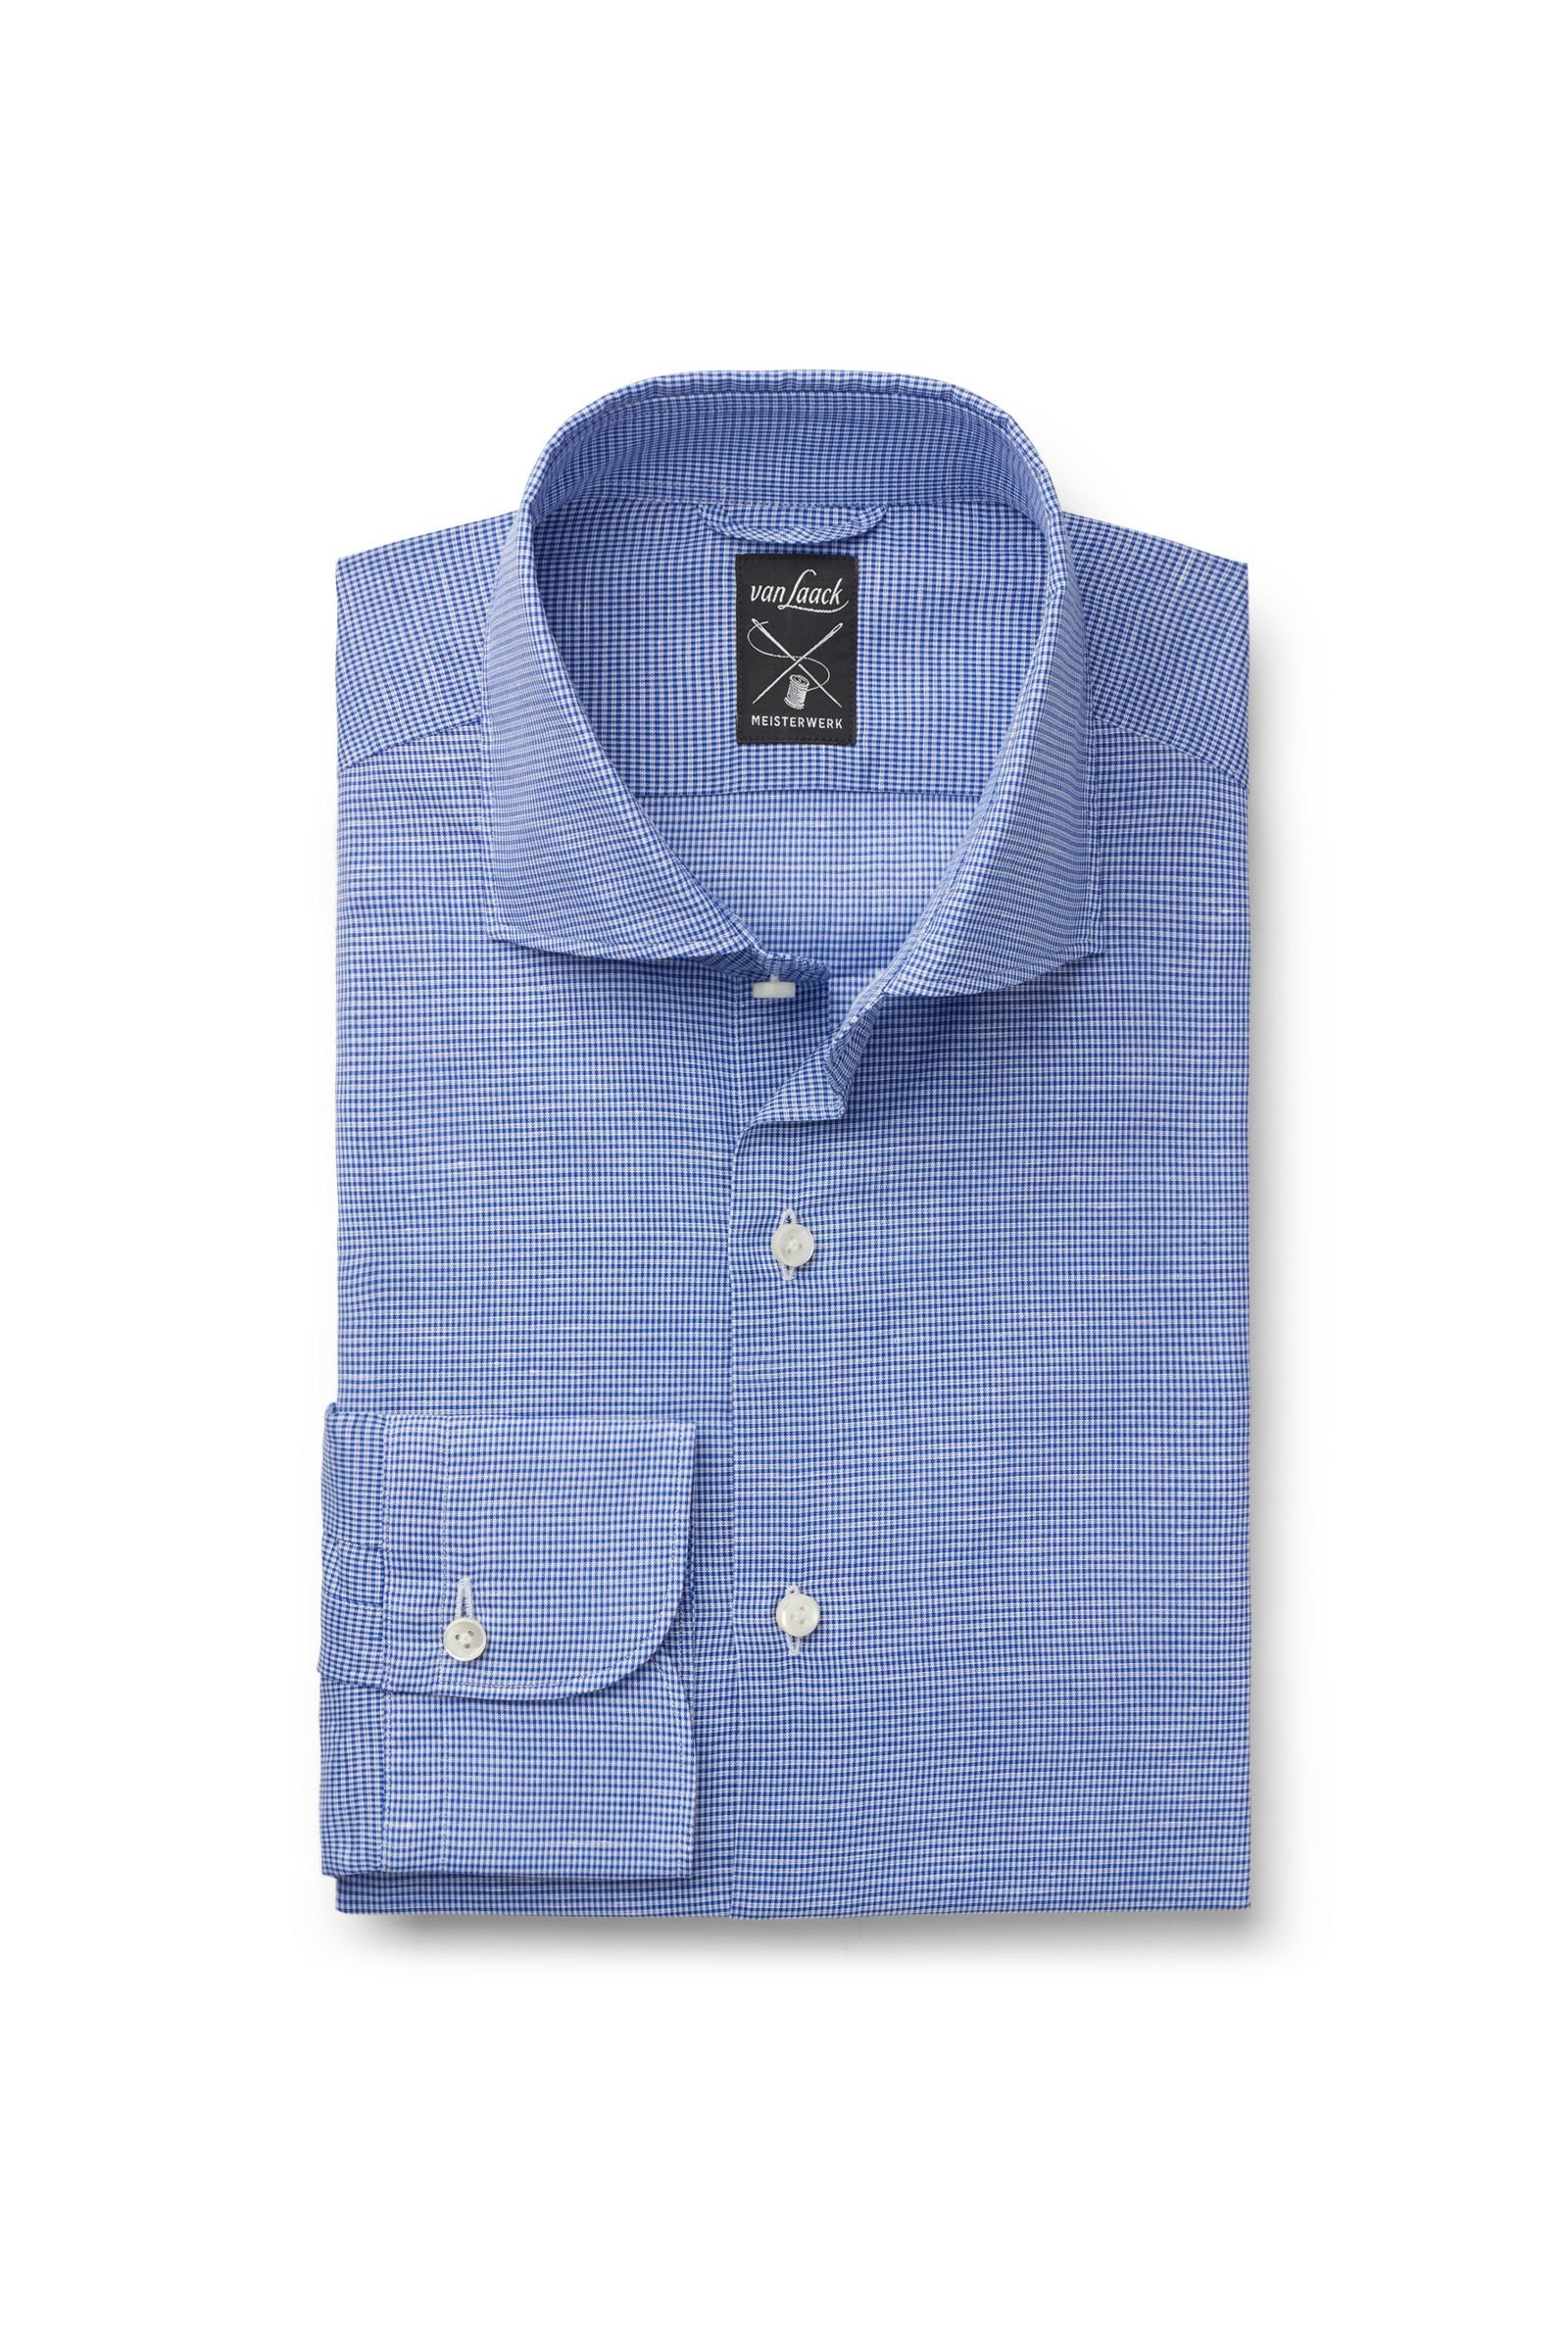 Business shirt 'Mivara Tailor Fit' shark collar blue checked